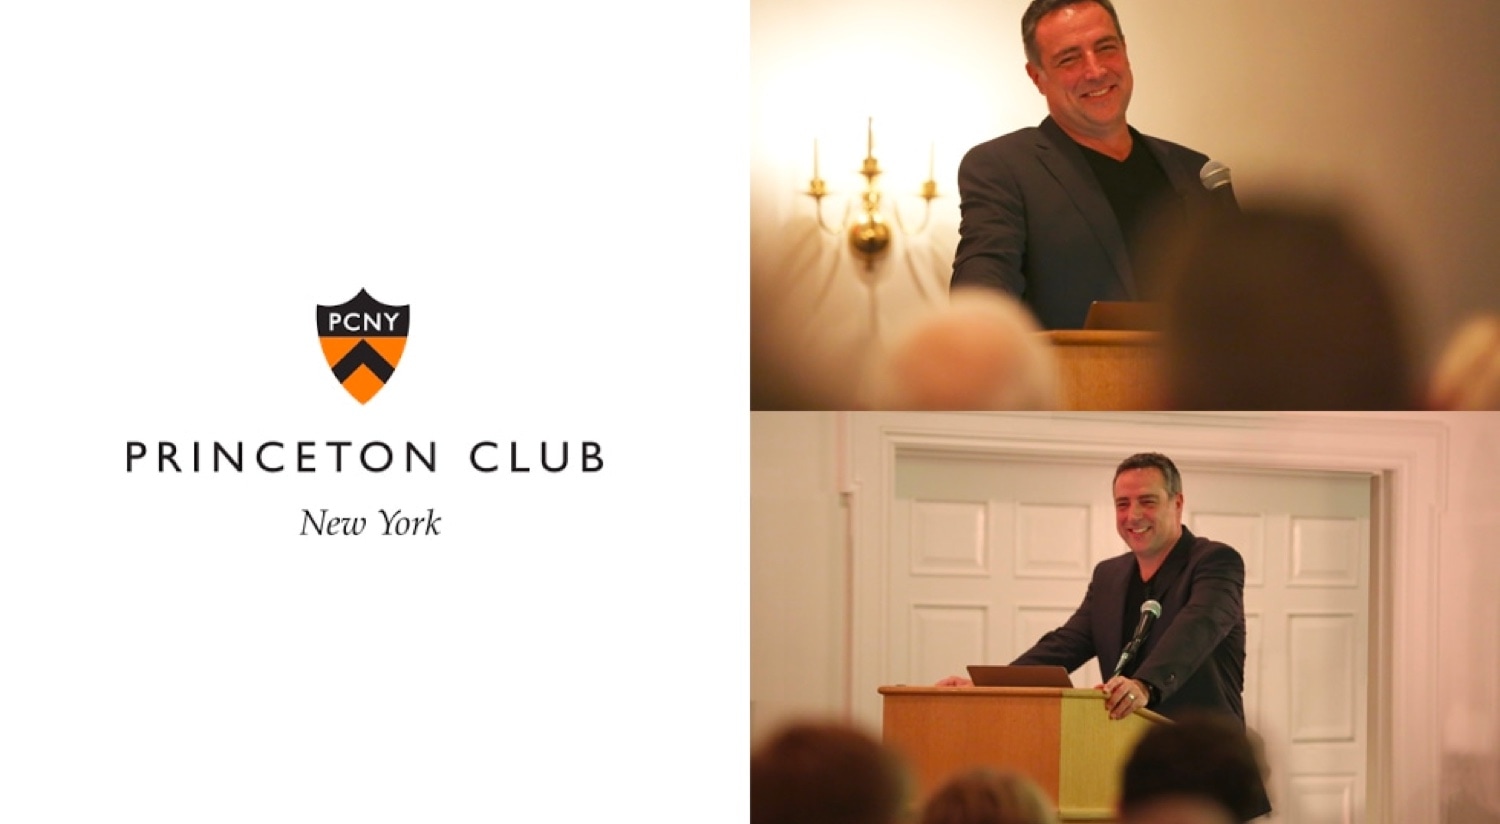 Princeton brand club in New York City.